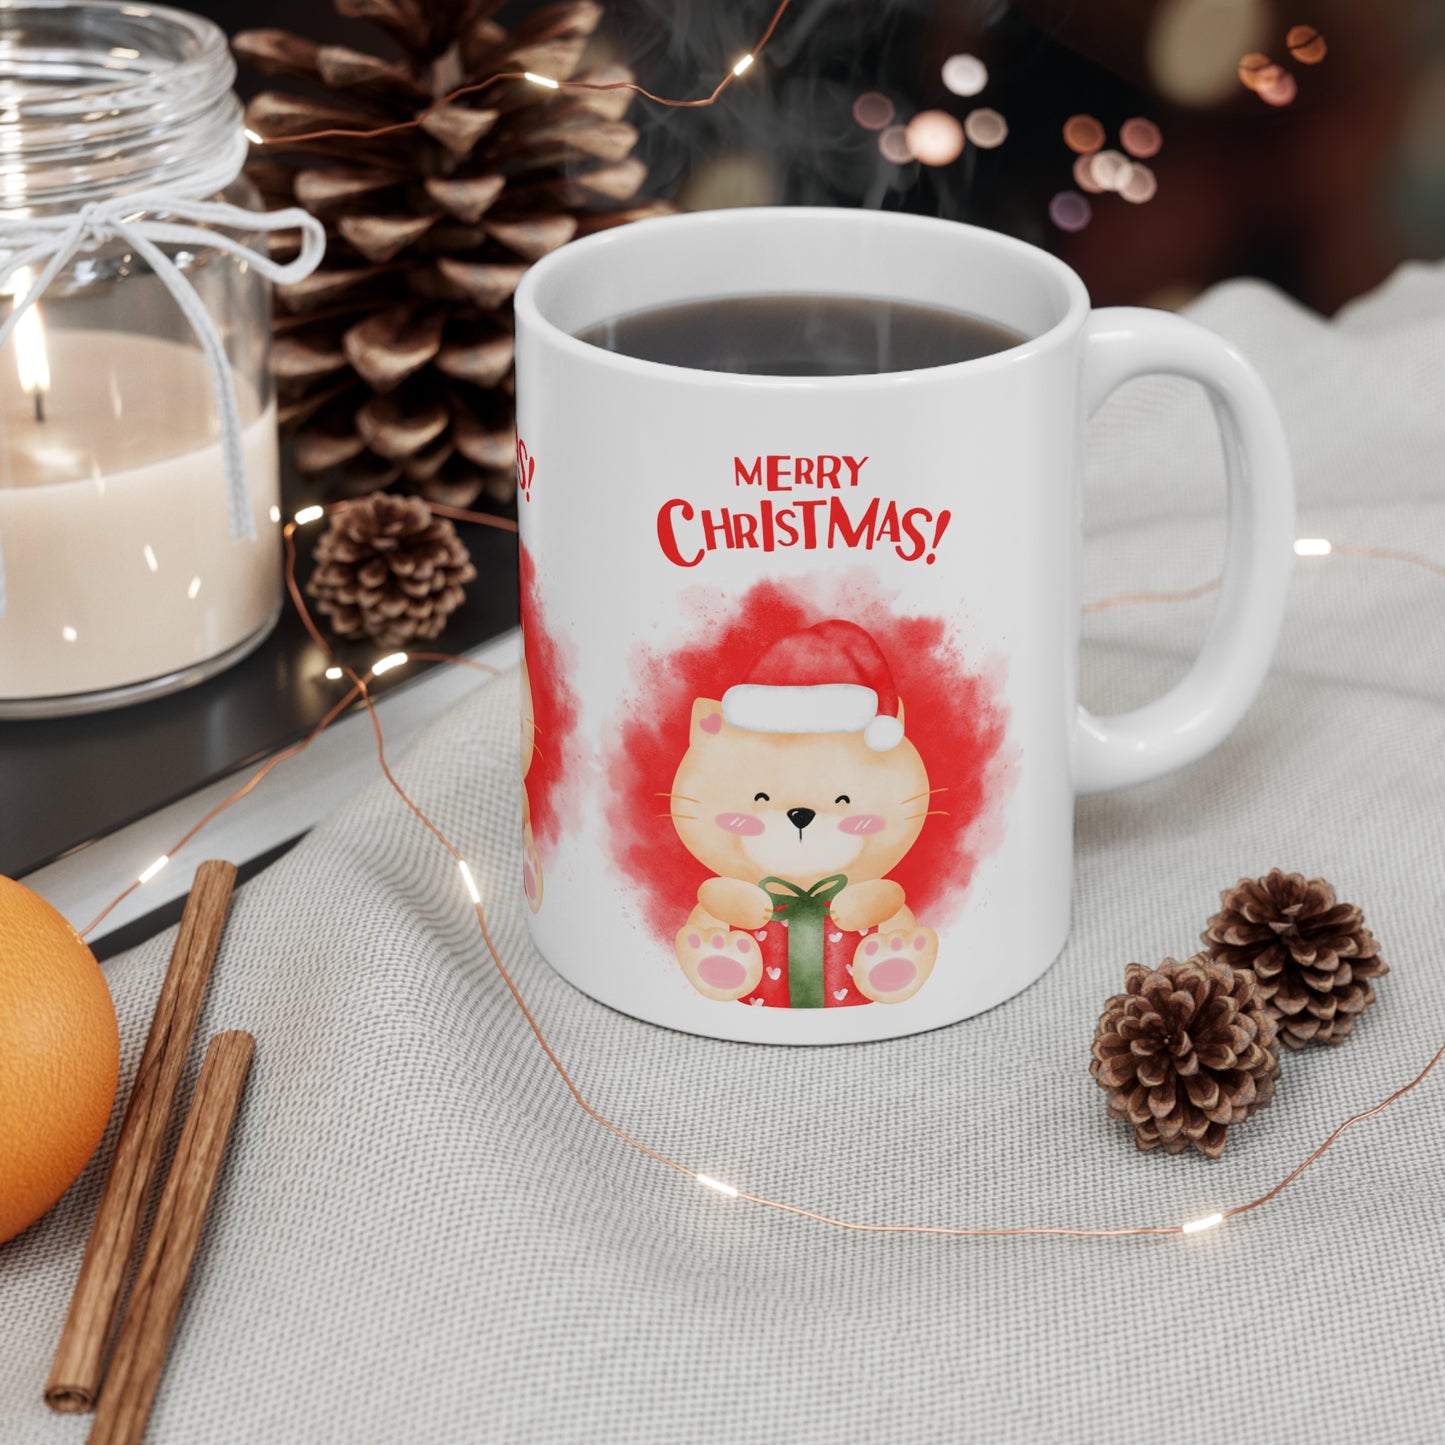 Merry Christmas with Teddy Printyed Ceramic Mugs, 11oz